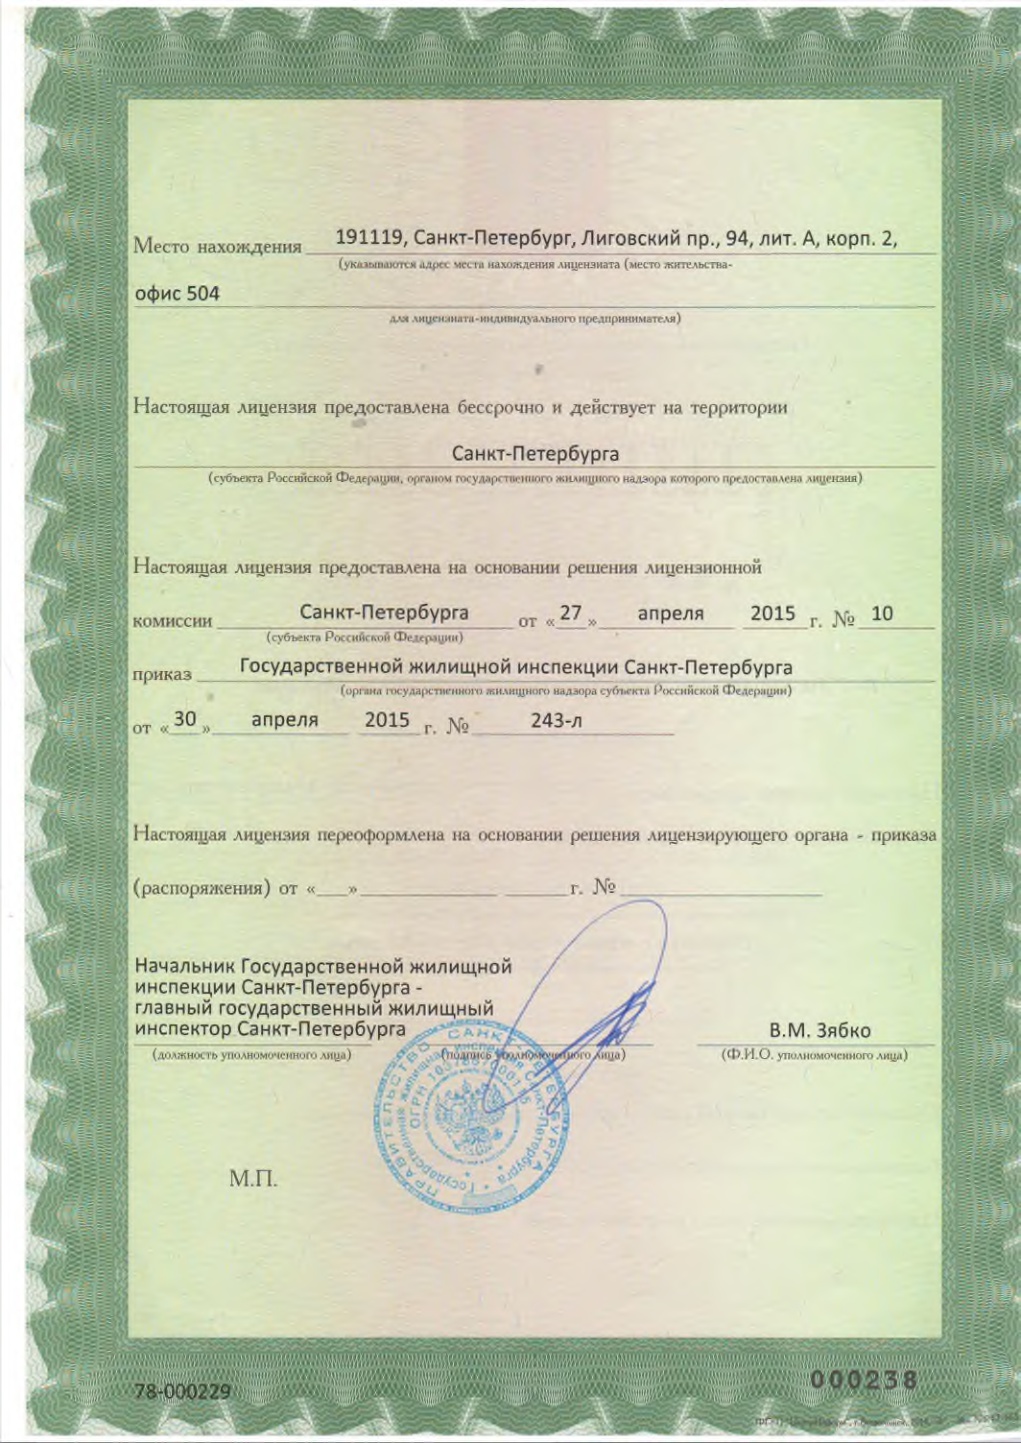 Лицензия на управление МКД №78-000229 от 30.04.2015